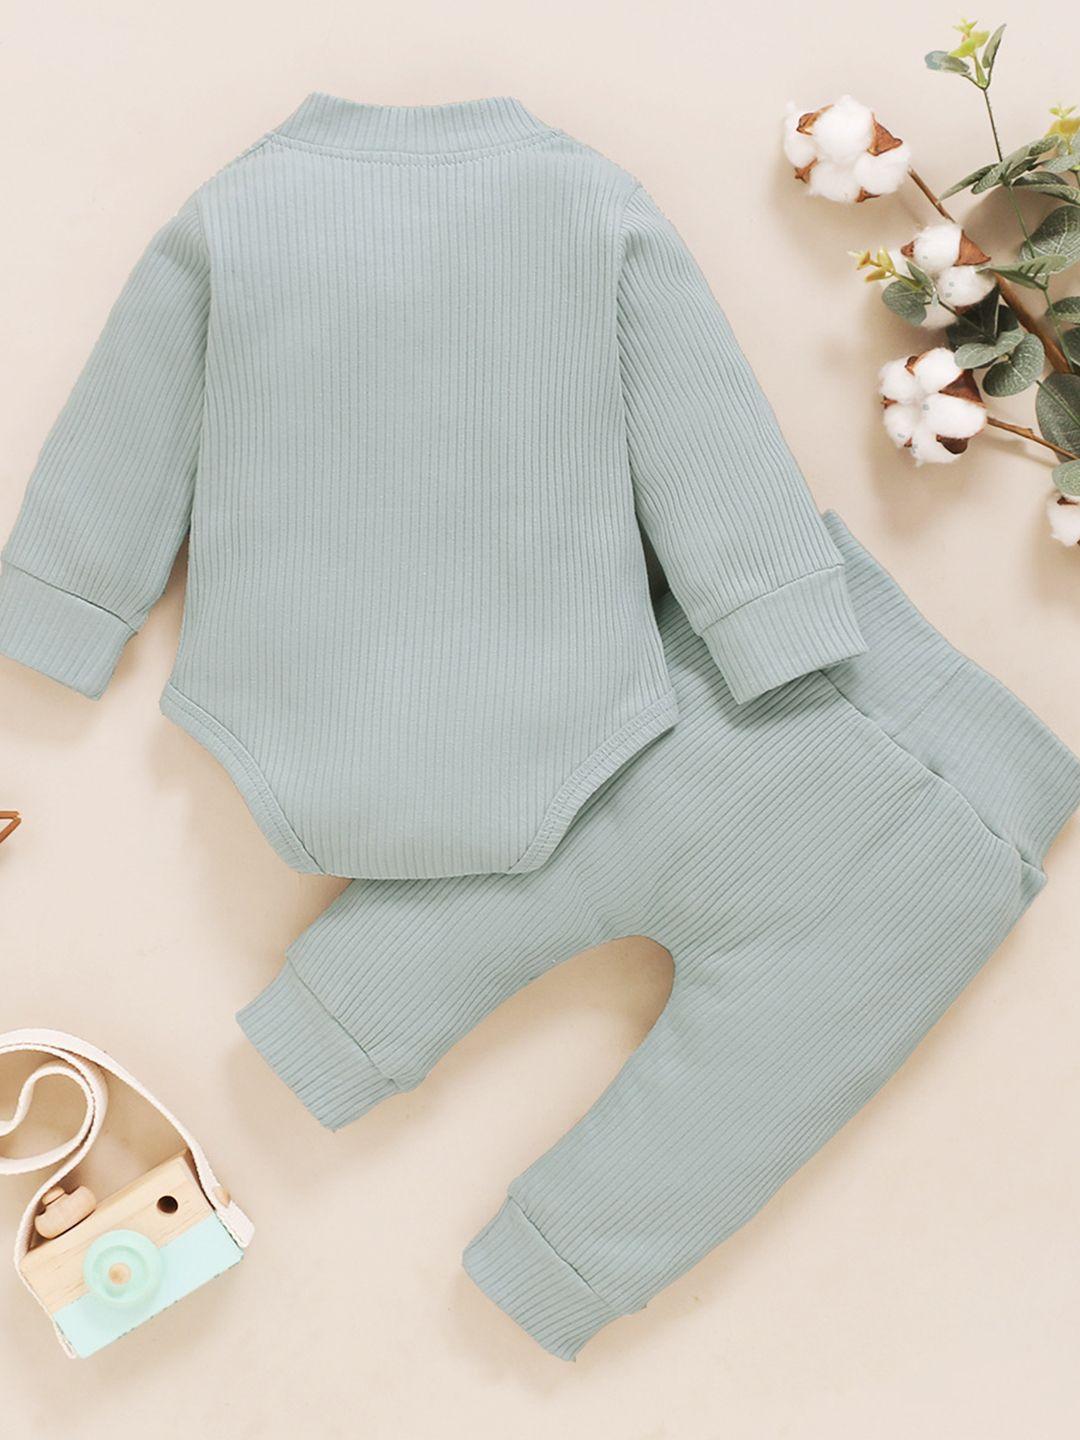 stylecast infants self design blue top with pyjamas